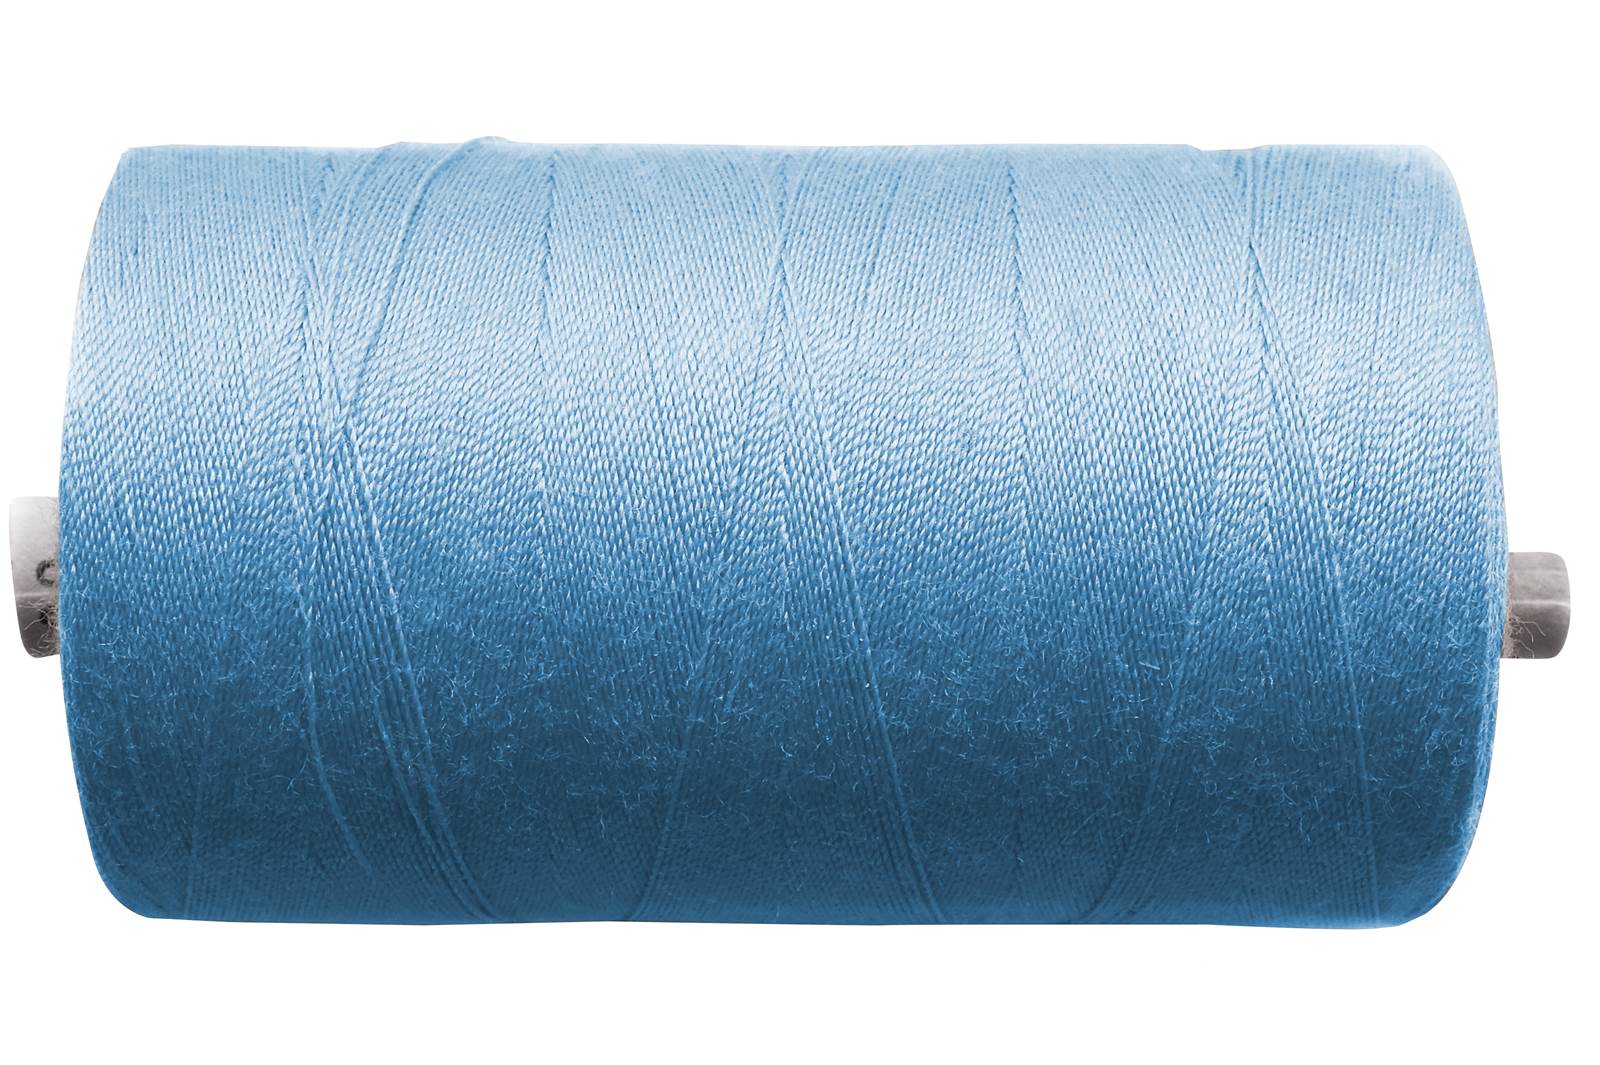 Sewing Yarn 100er - Light blue